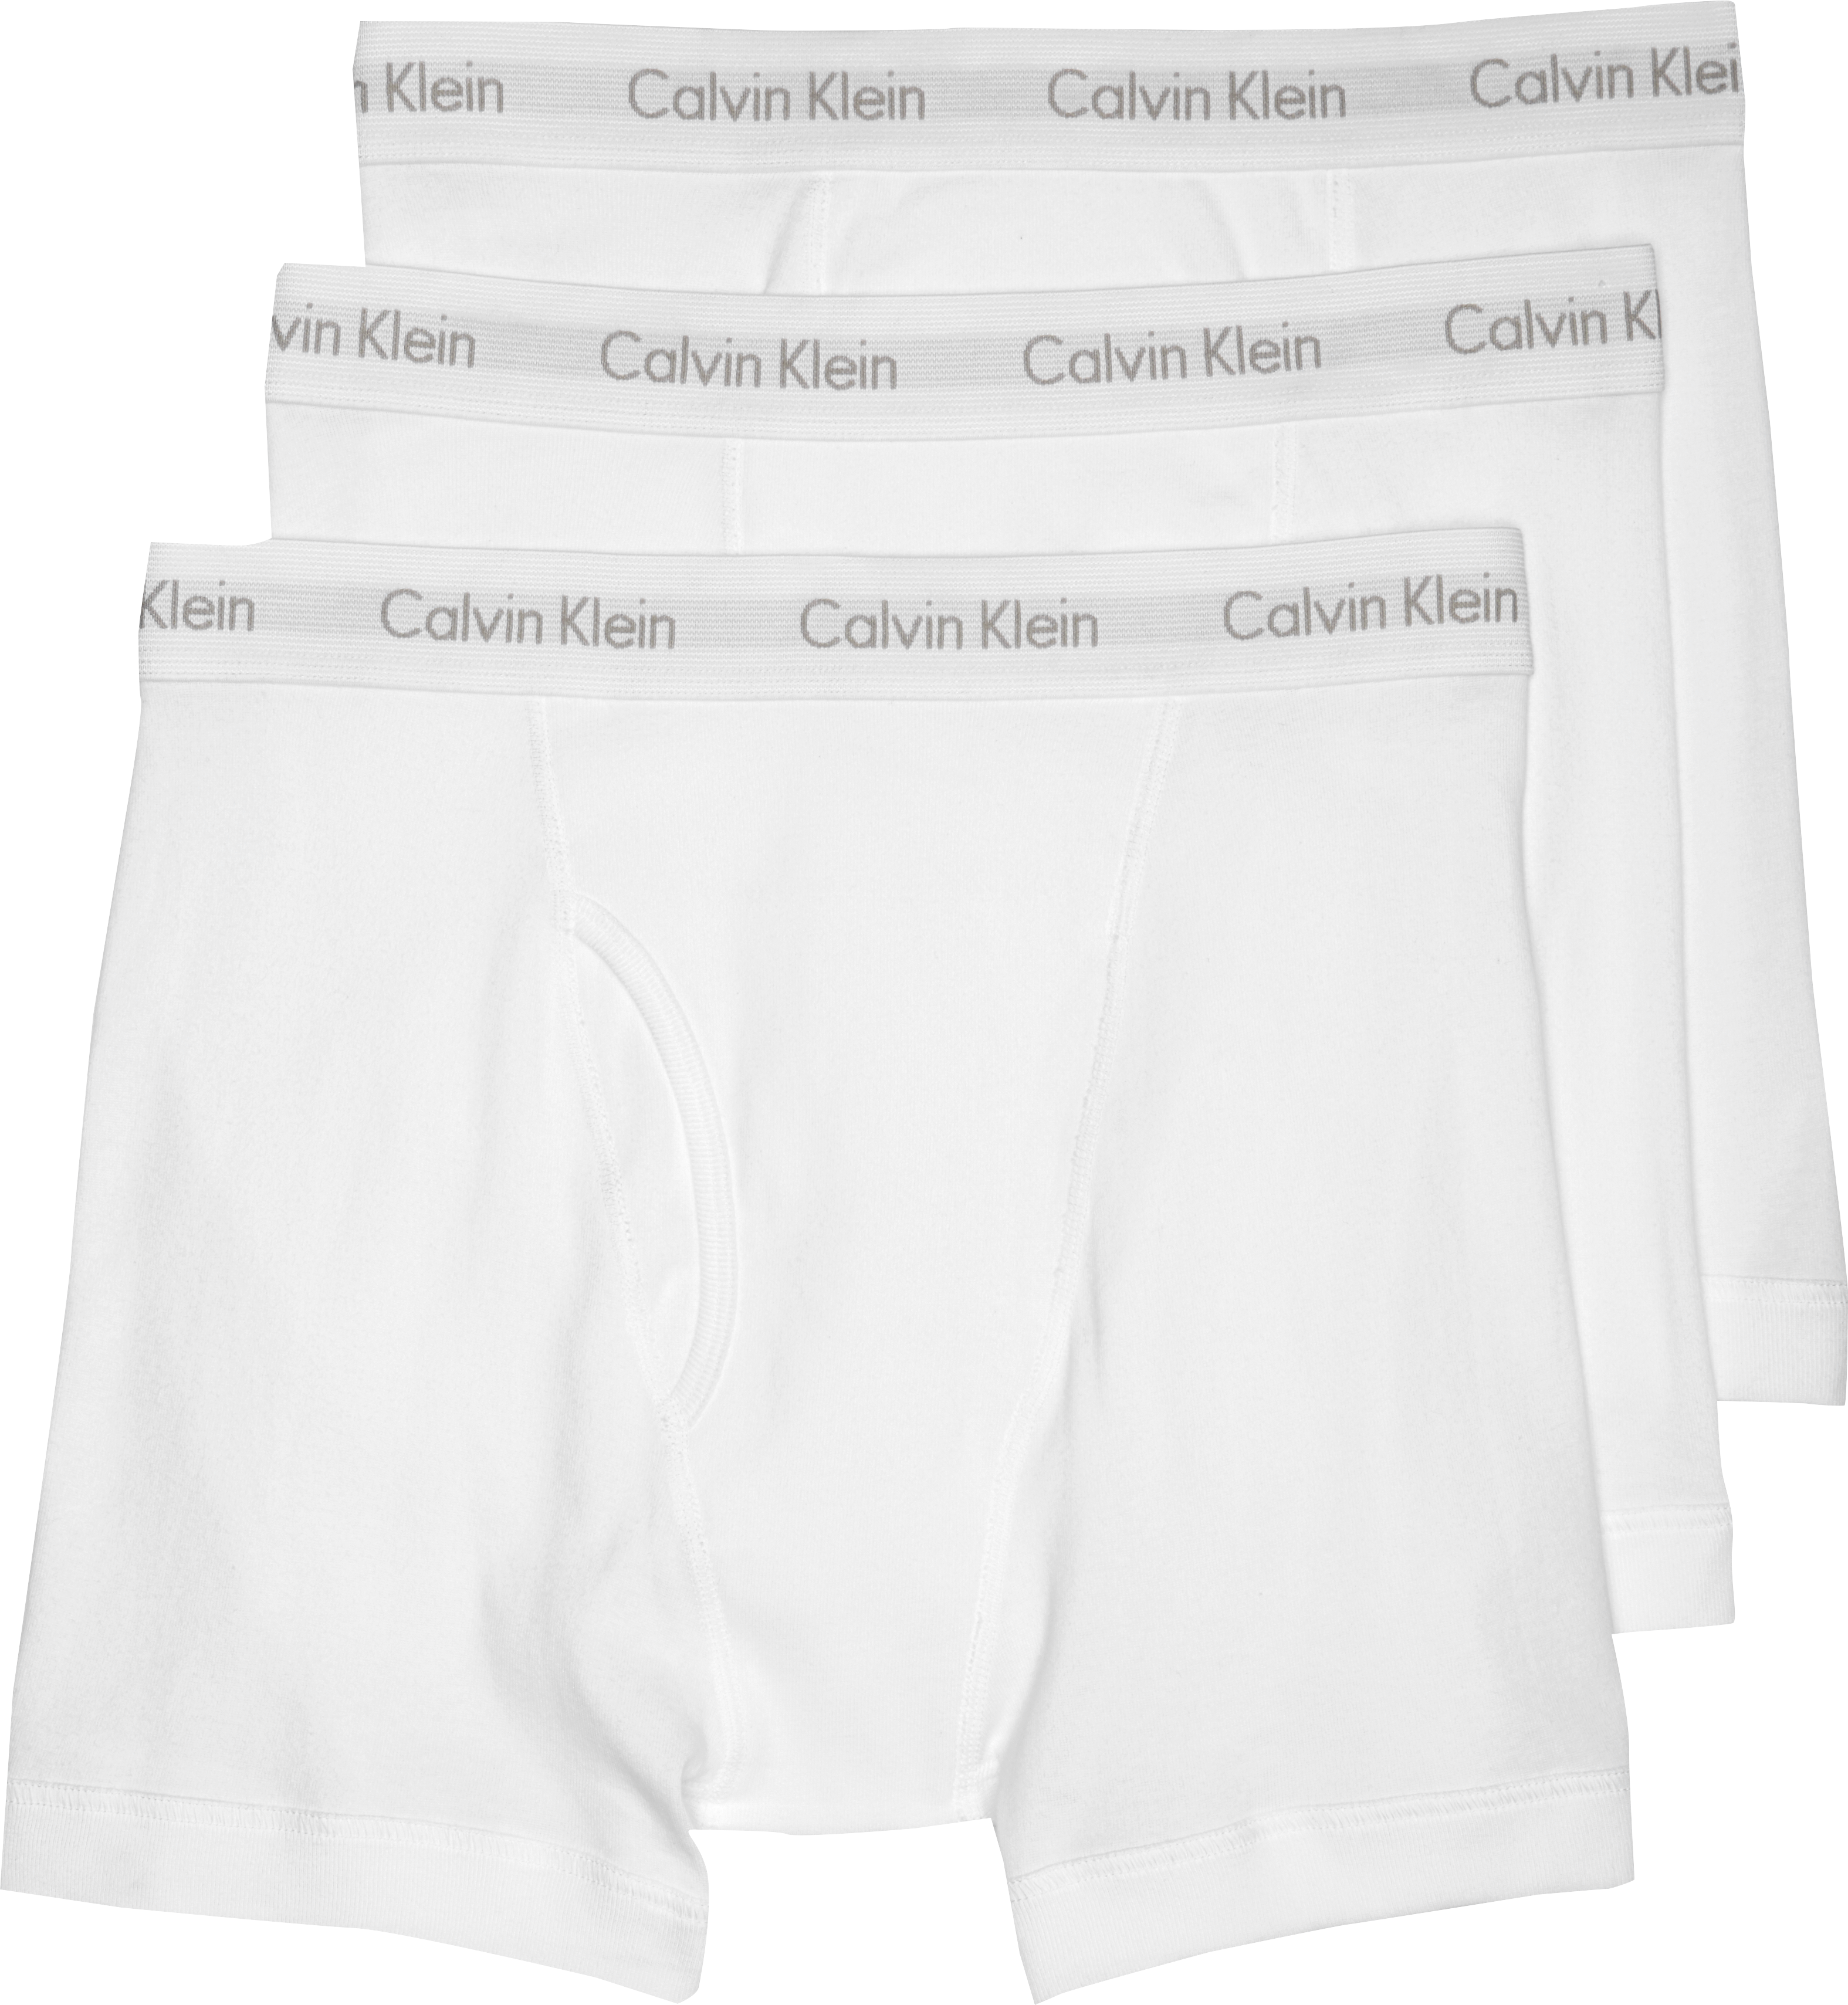 Calvin Klein White Cotton Classic Boxer Briefs, 3-Pack - Men's Sale ...